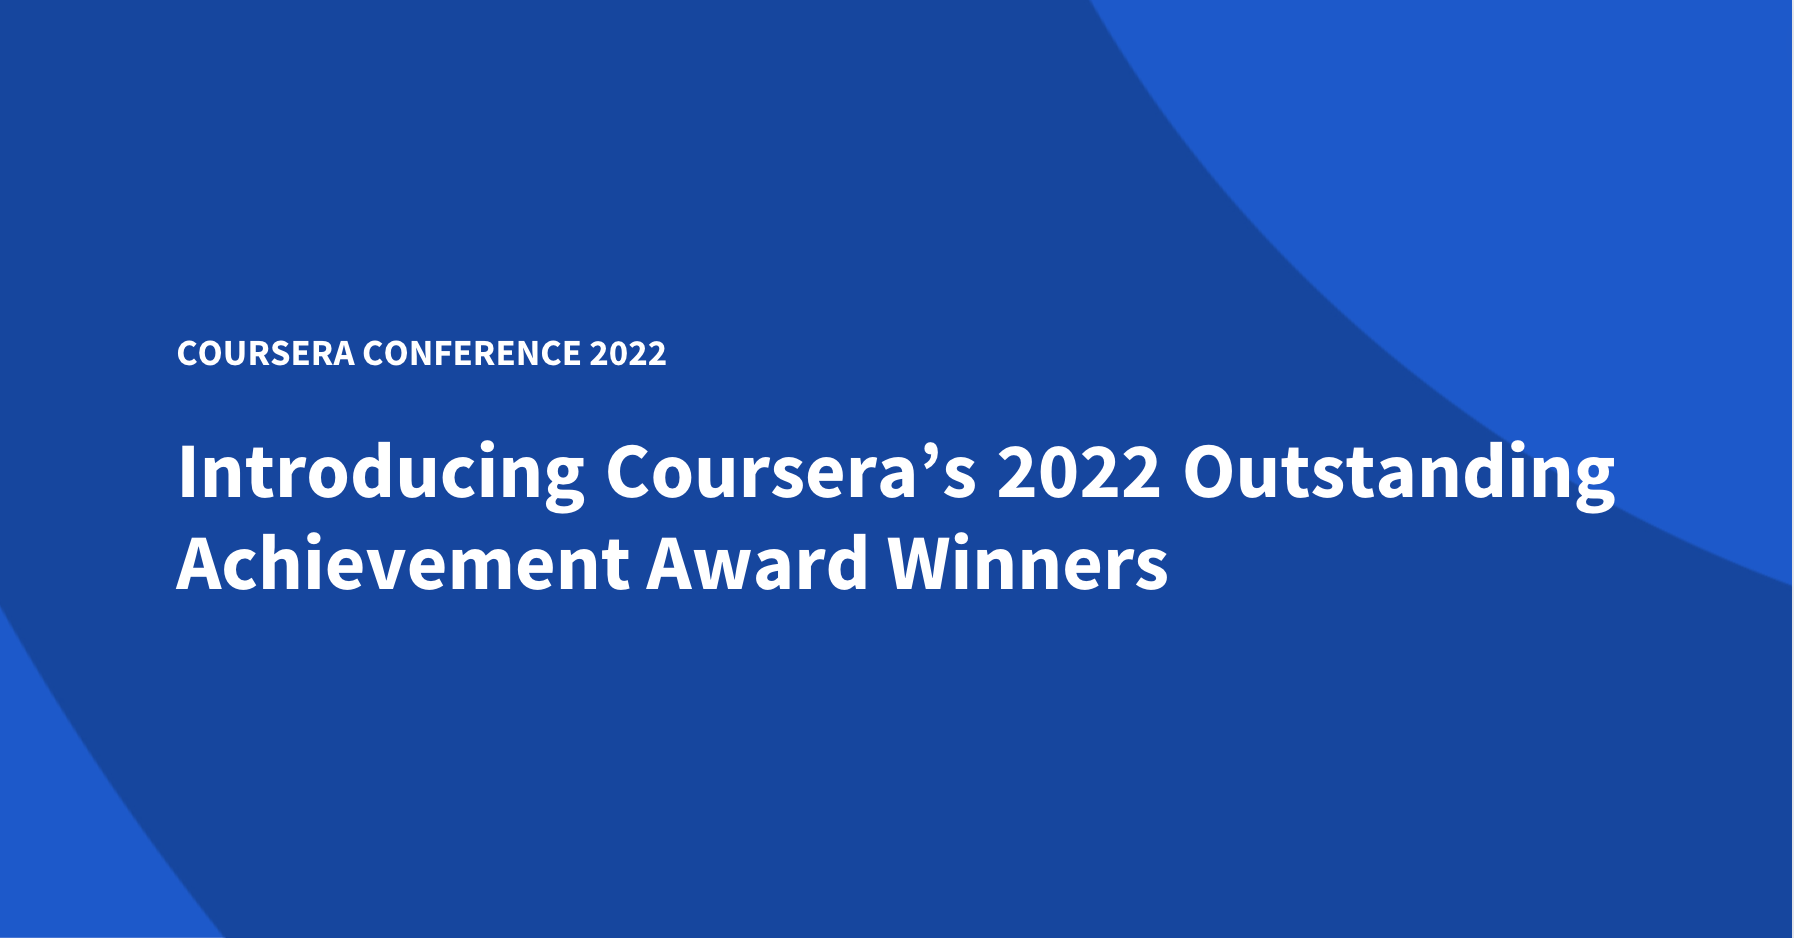 Coursera Convention 2022 Award Winners